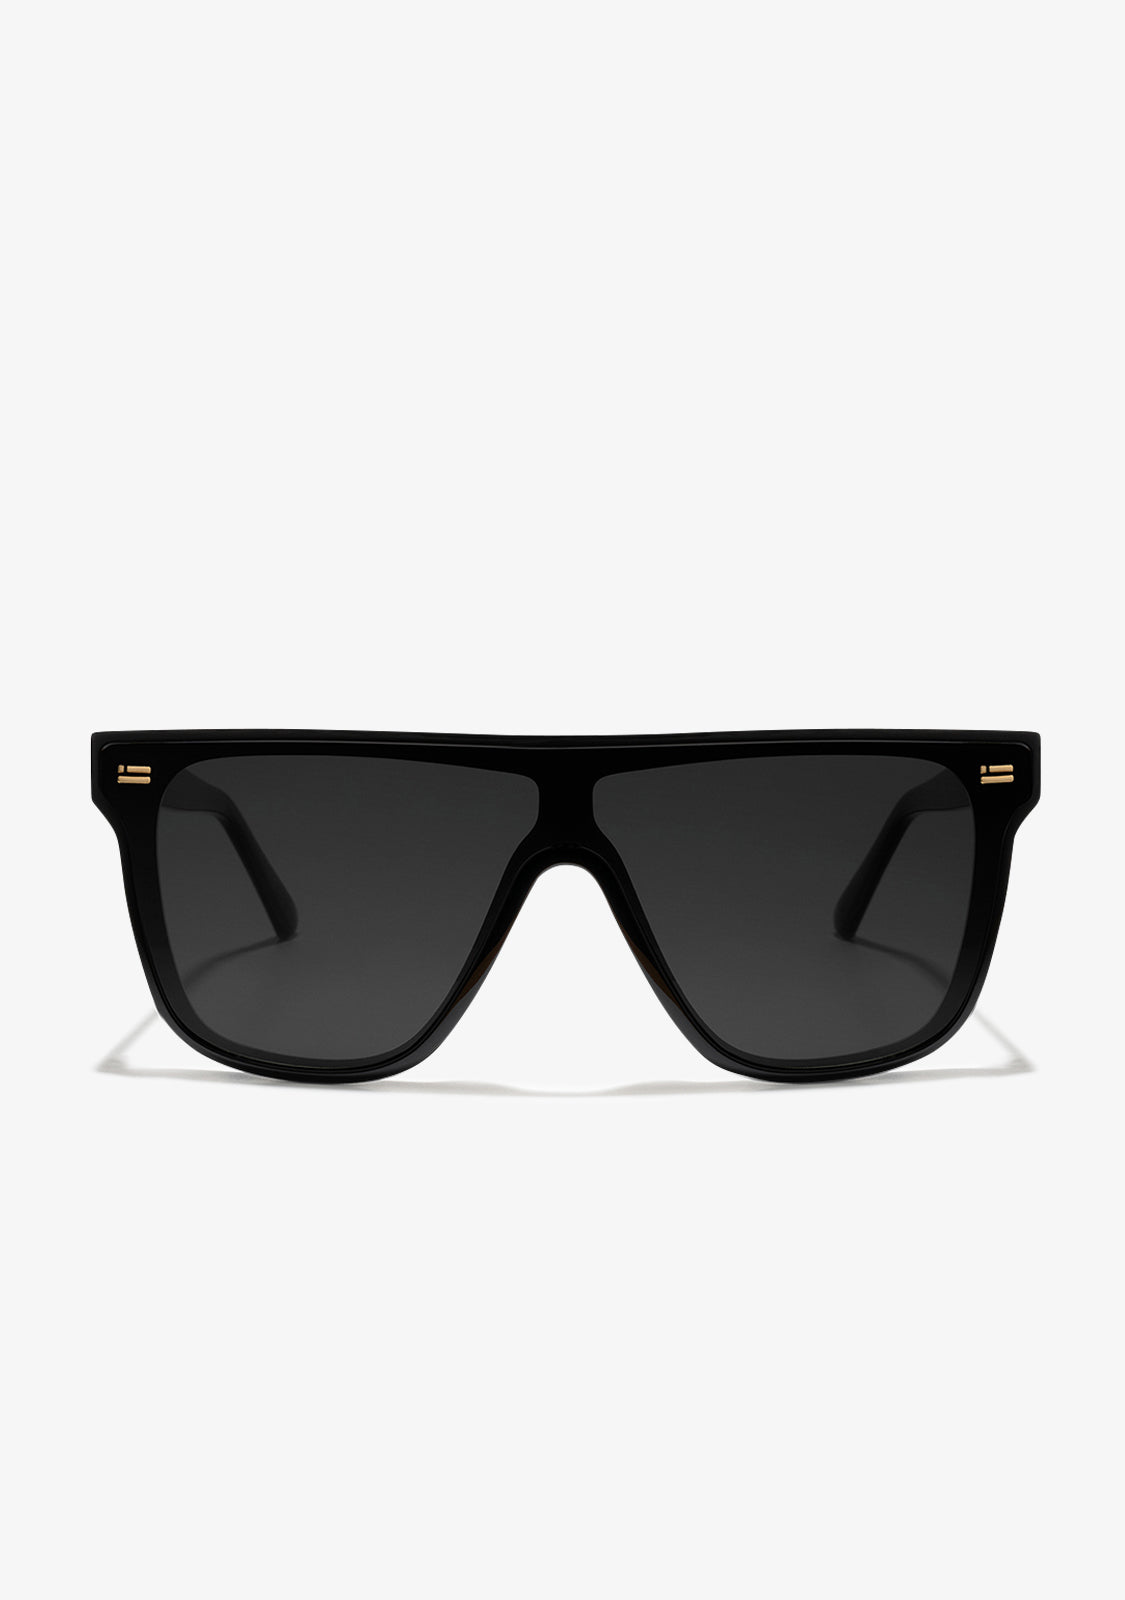 2x1 D.Franklin Sunglasses - Infinity Black / Black